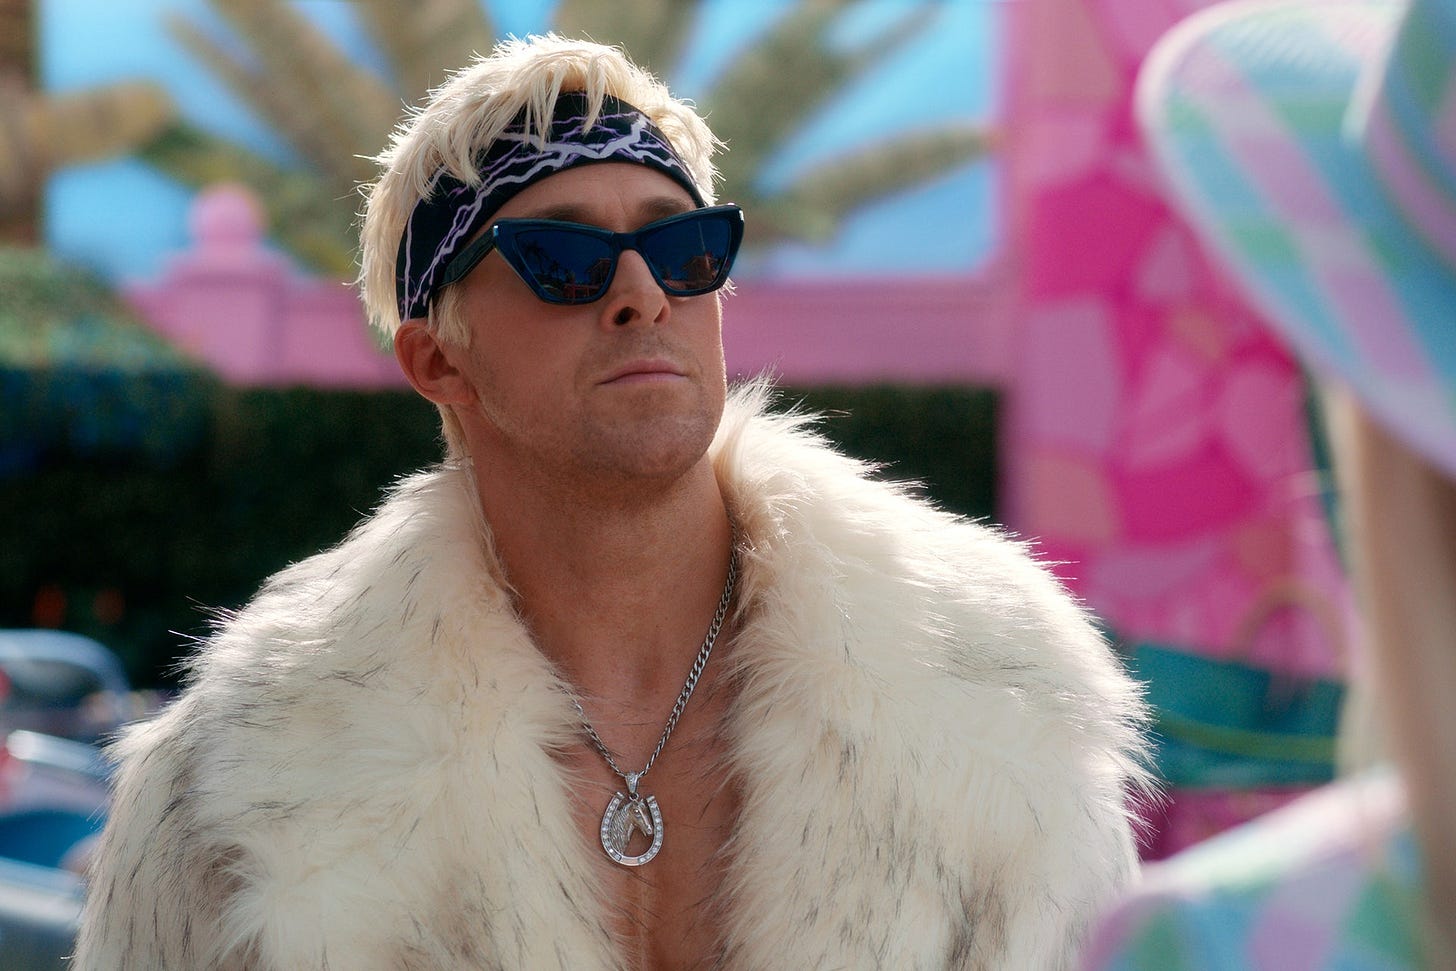 Ryan Gosling's Ken wearing fur coat and shades in full dudebro dickhead mode